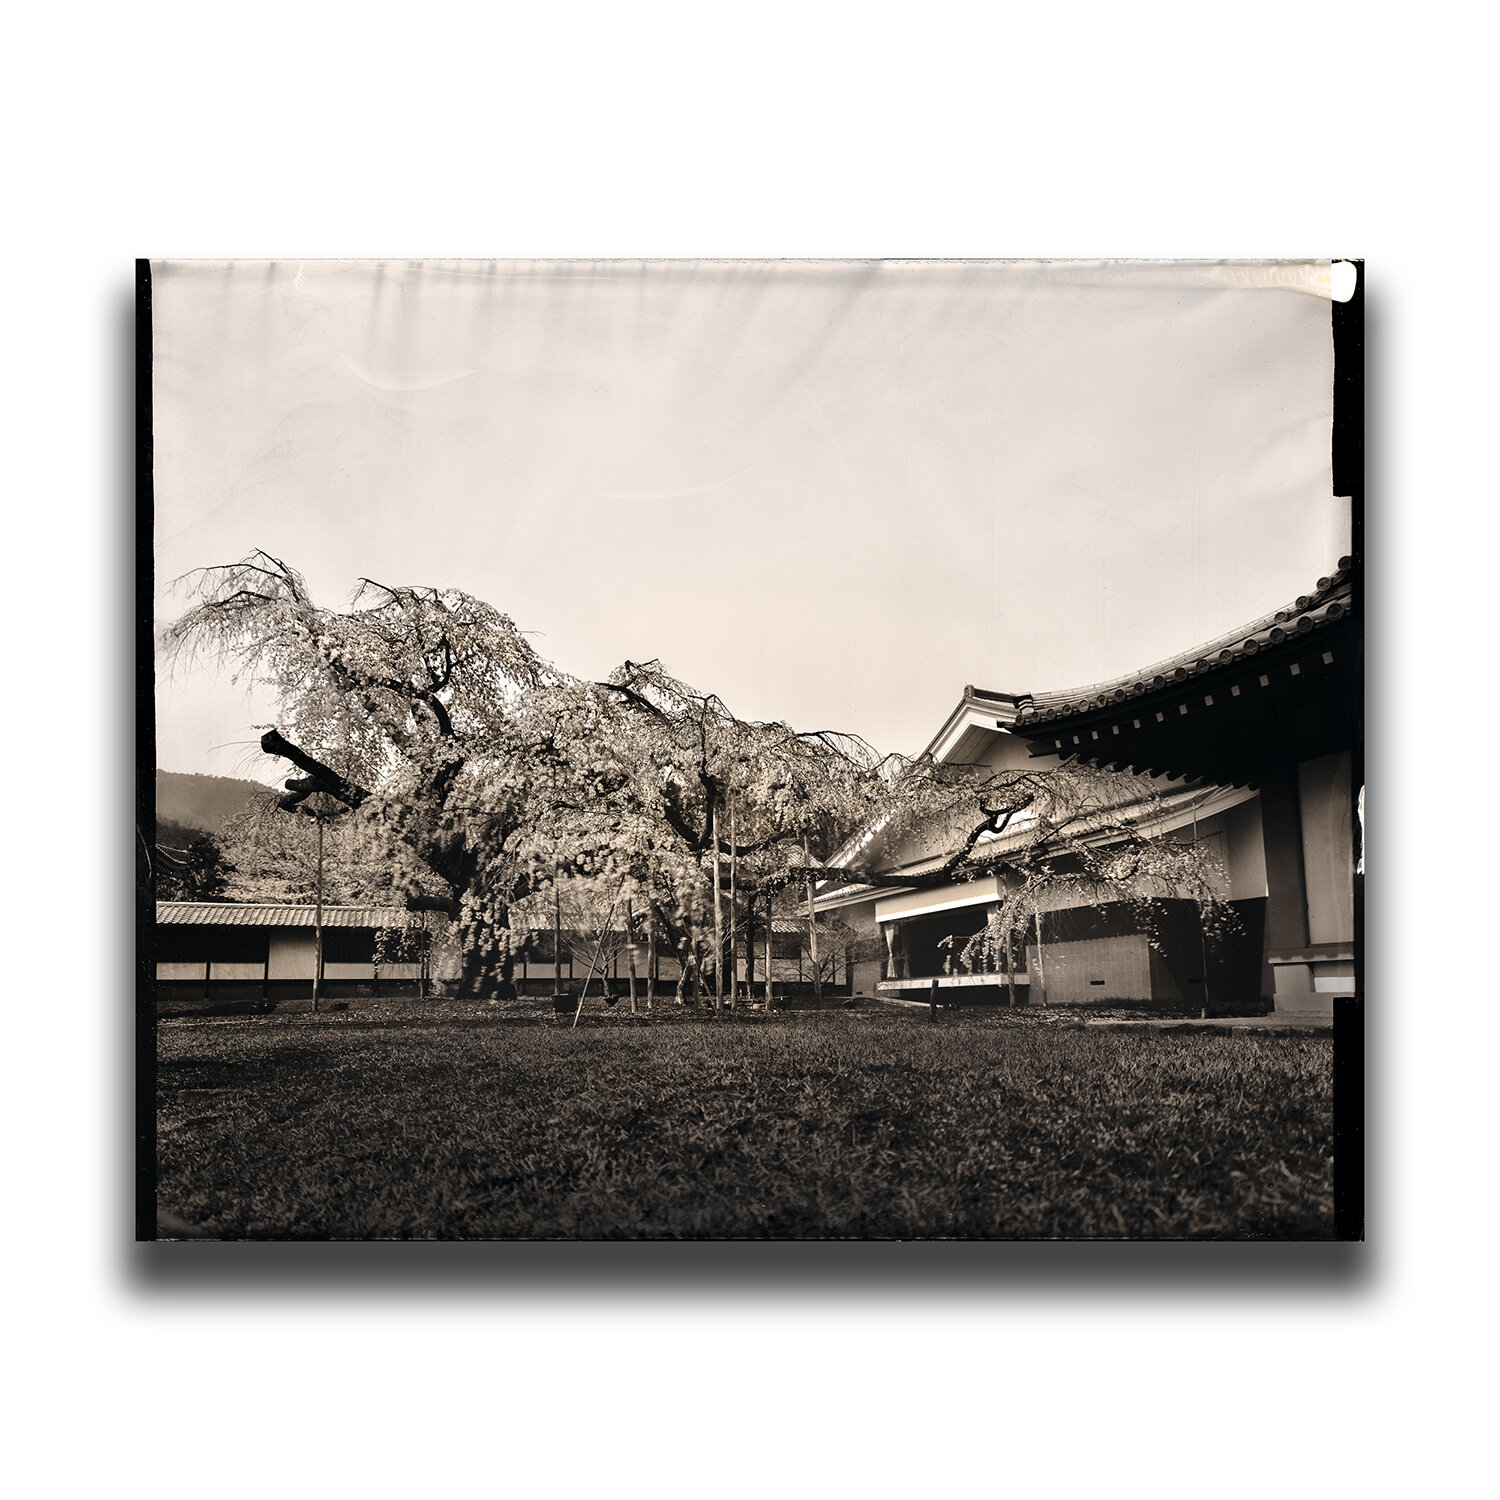 Kyoto・Daigo-ji(Temple)・Shidare-zakura(cherry blossom)/京都・醍醐寺・醍醐深雪桜/교토・다이고사・벚꽃/京都・醍醐寺・醍醐深雪桜